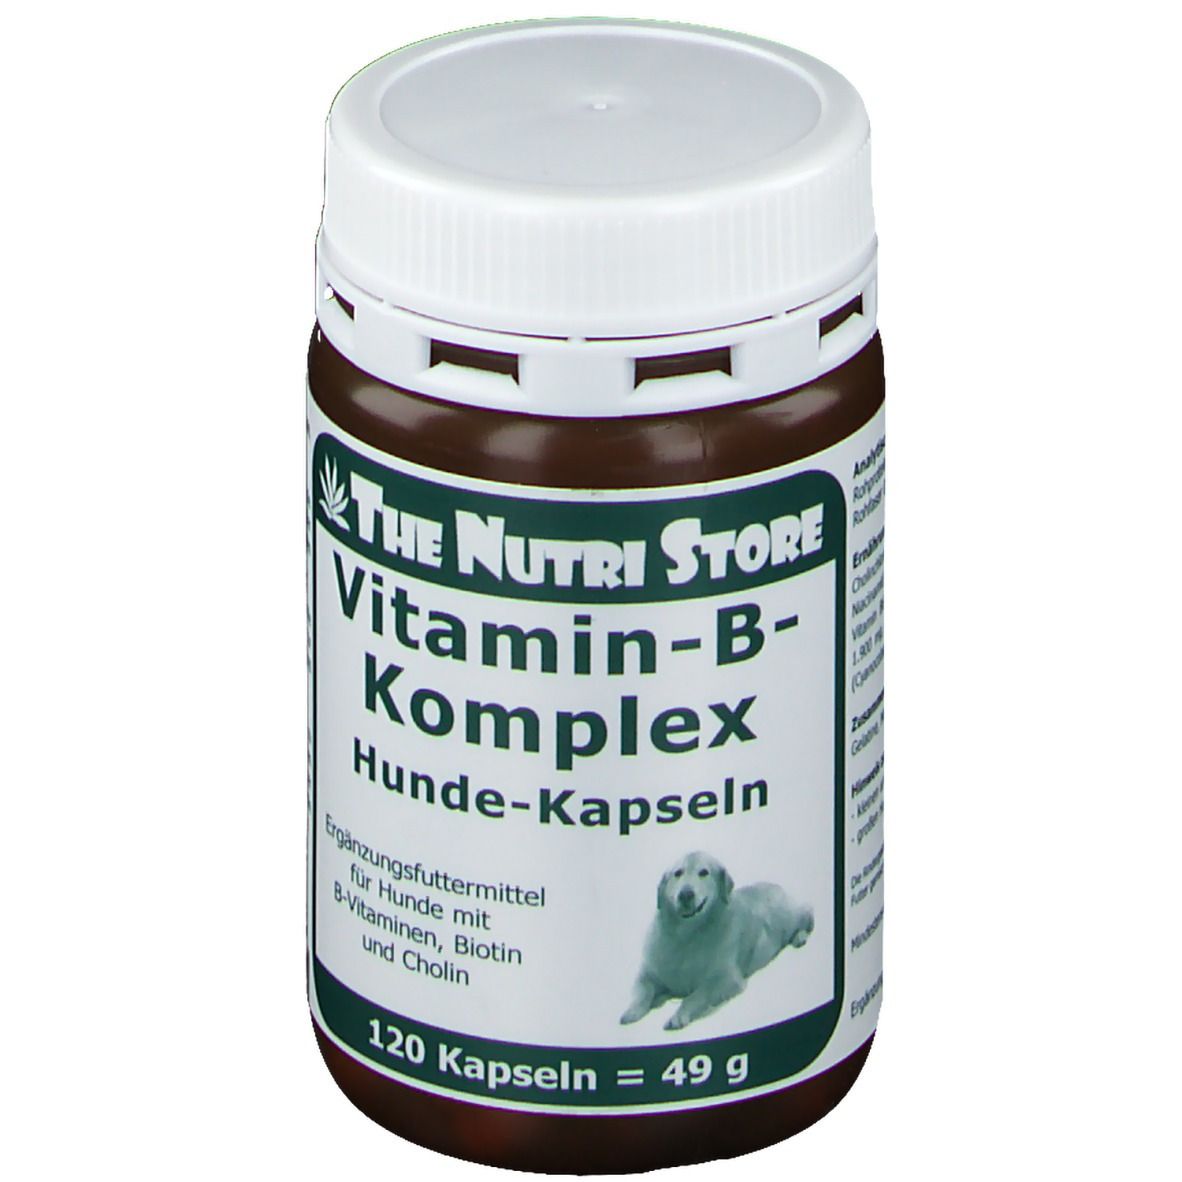 The Nutri Store Vitamin-B-Komplex Hunde-Kapseln